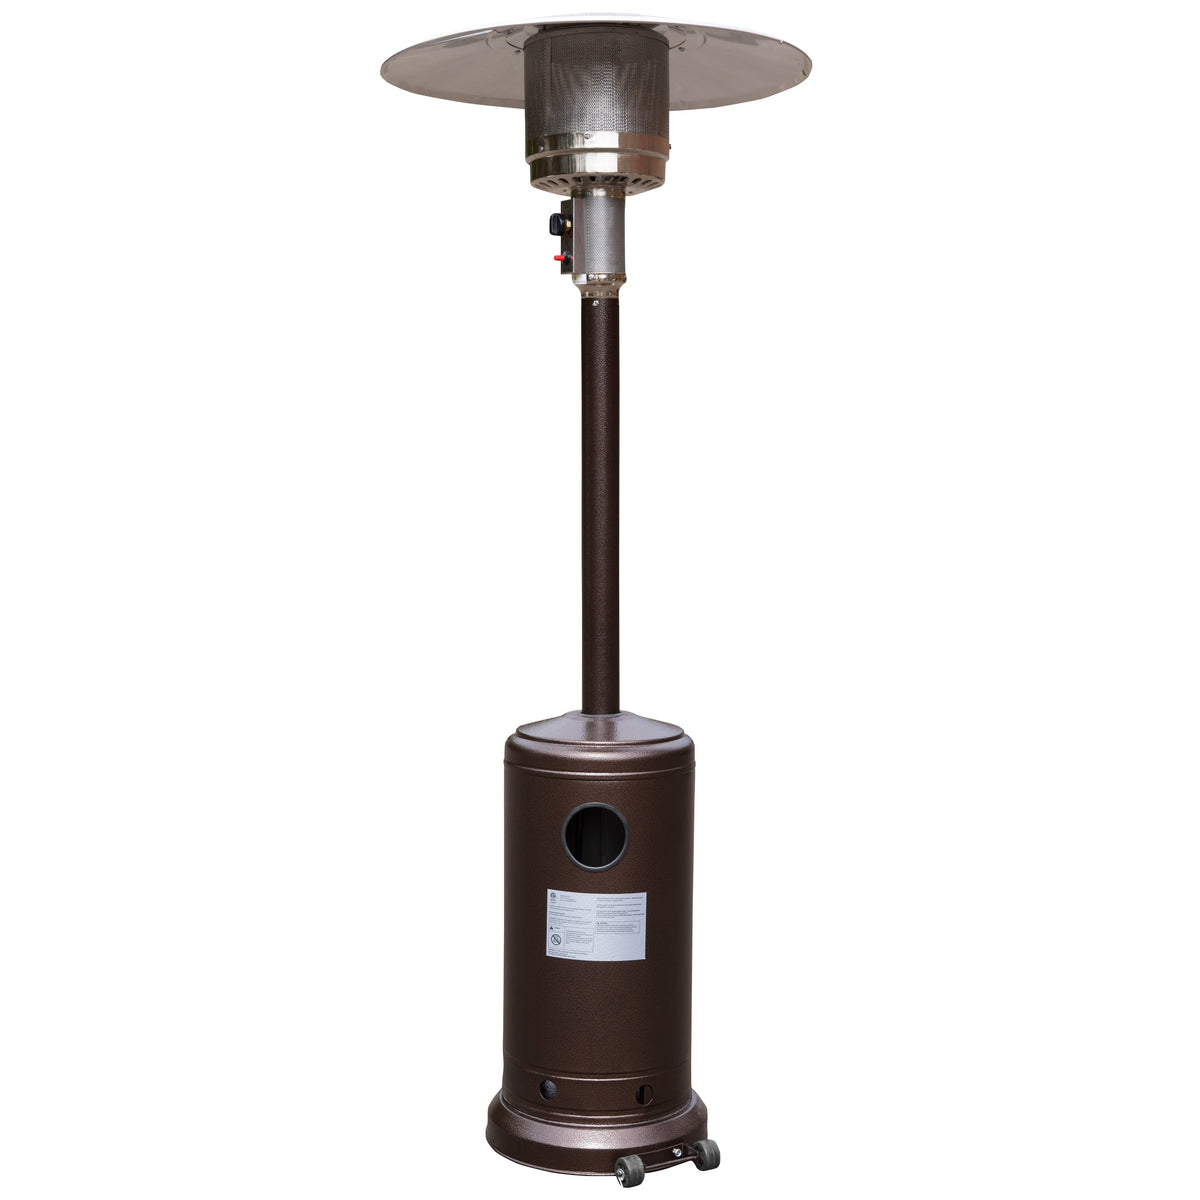 Bronze |#| Outdoor Patio Heater - Bronze - 7.5 Feet Round Steel Patio Heater - 40,000 BTU's